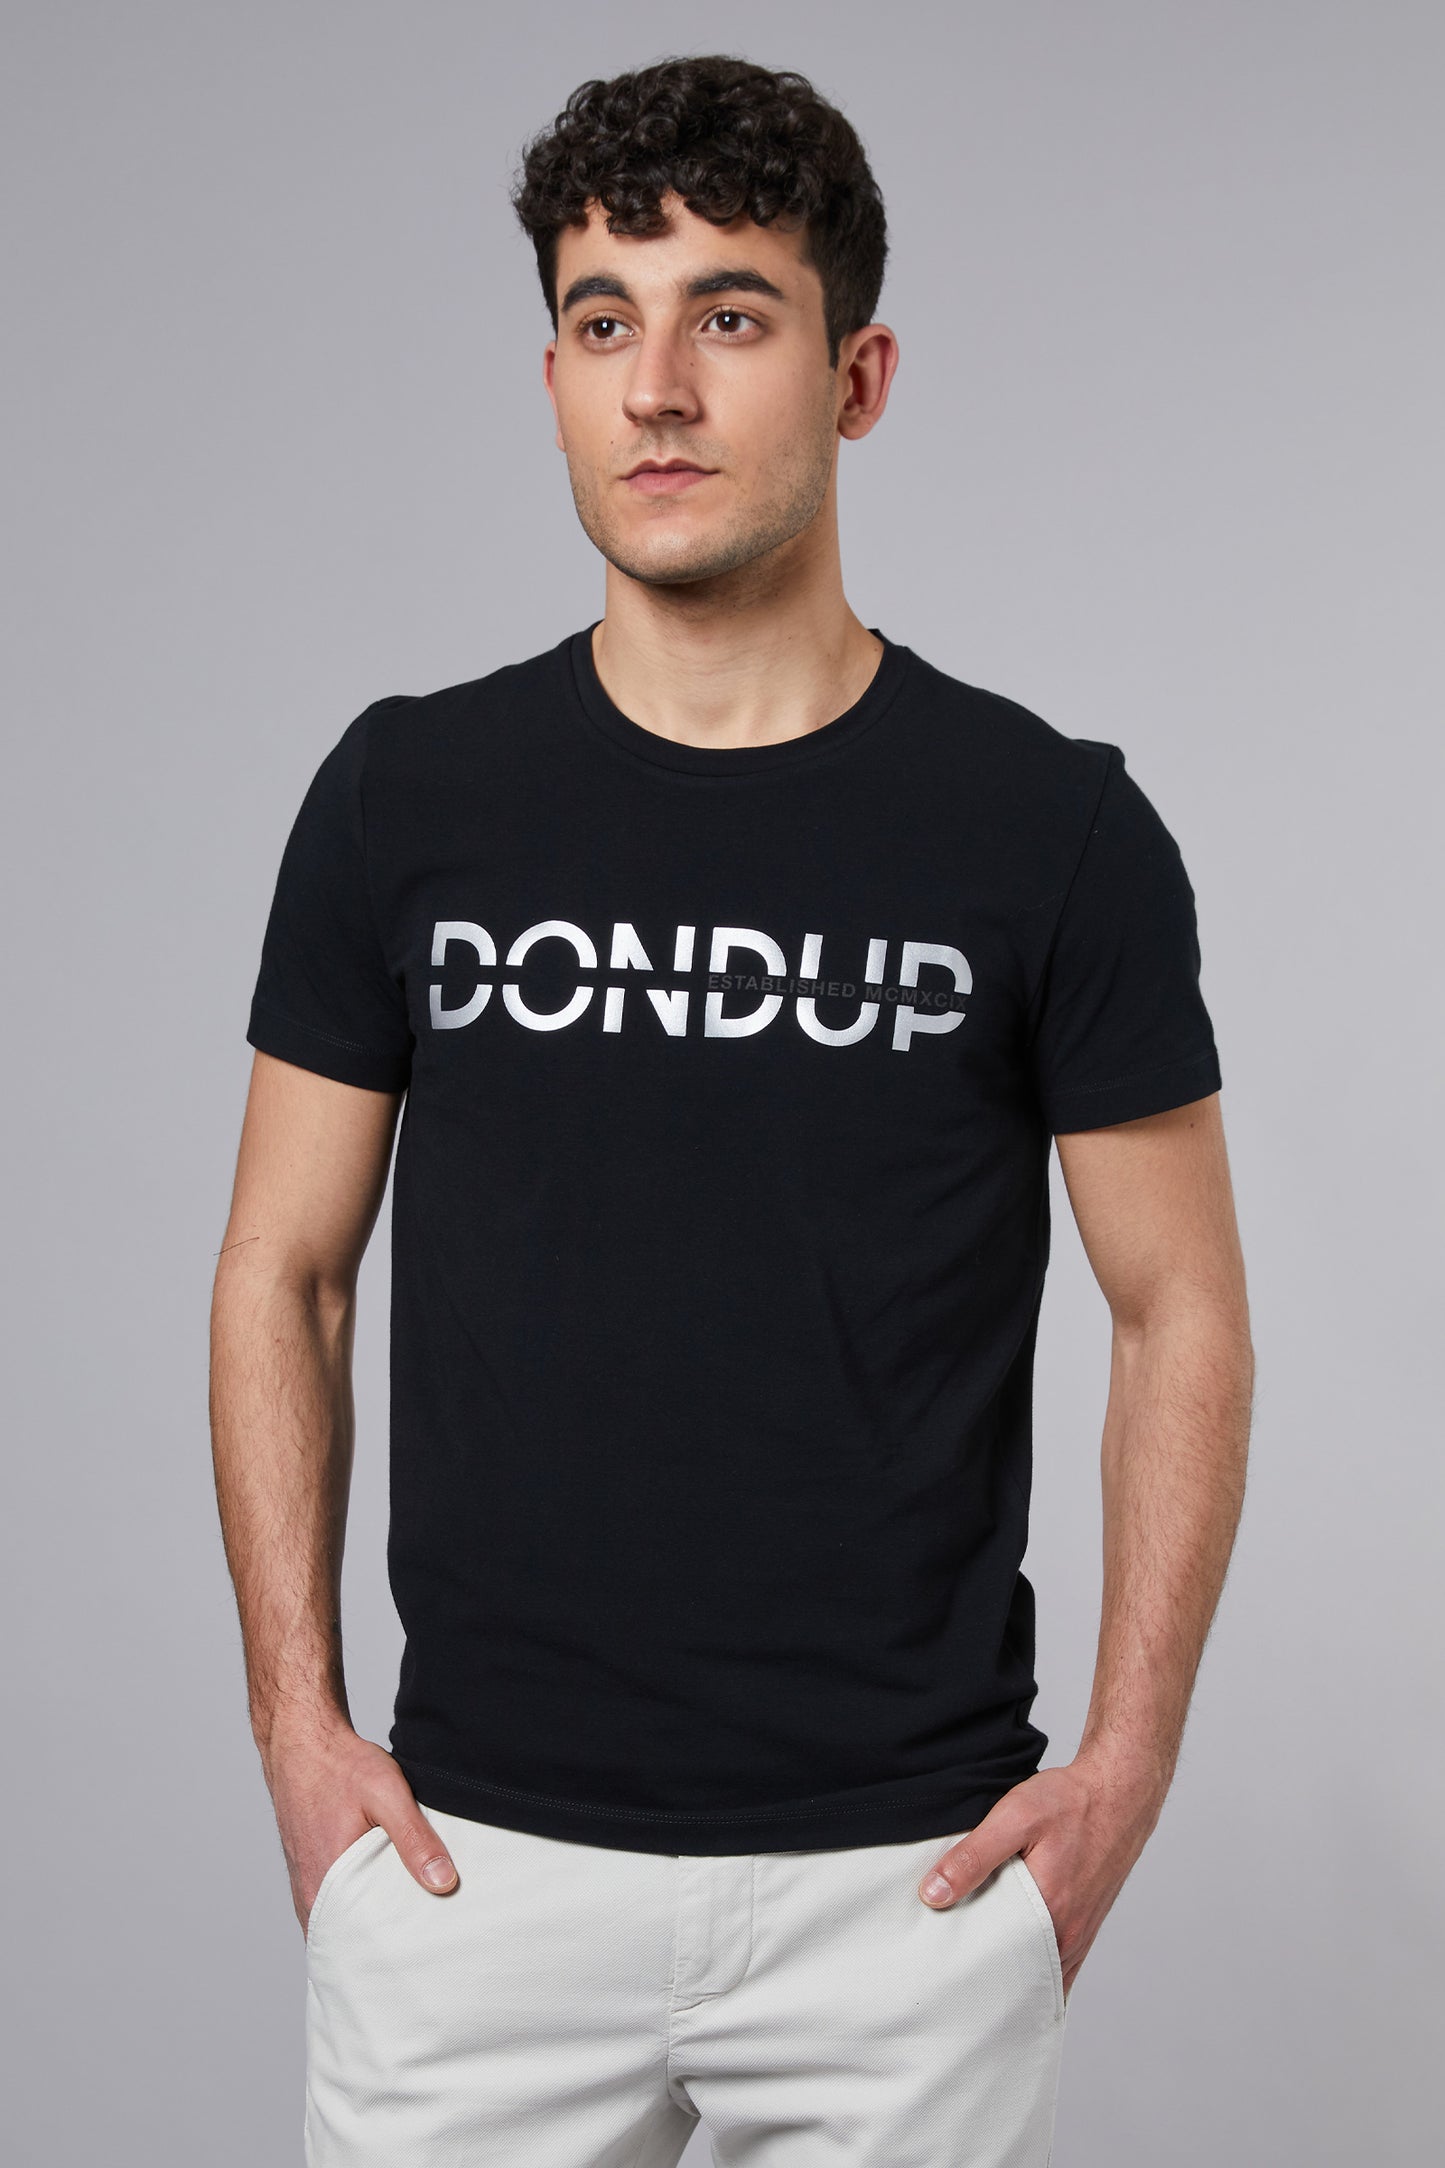 Dondup T-shirt Bianco Uomo Modamica